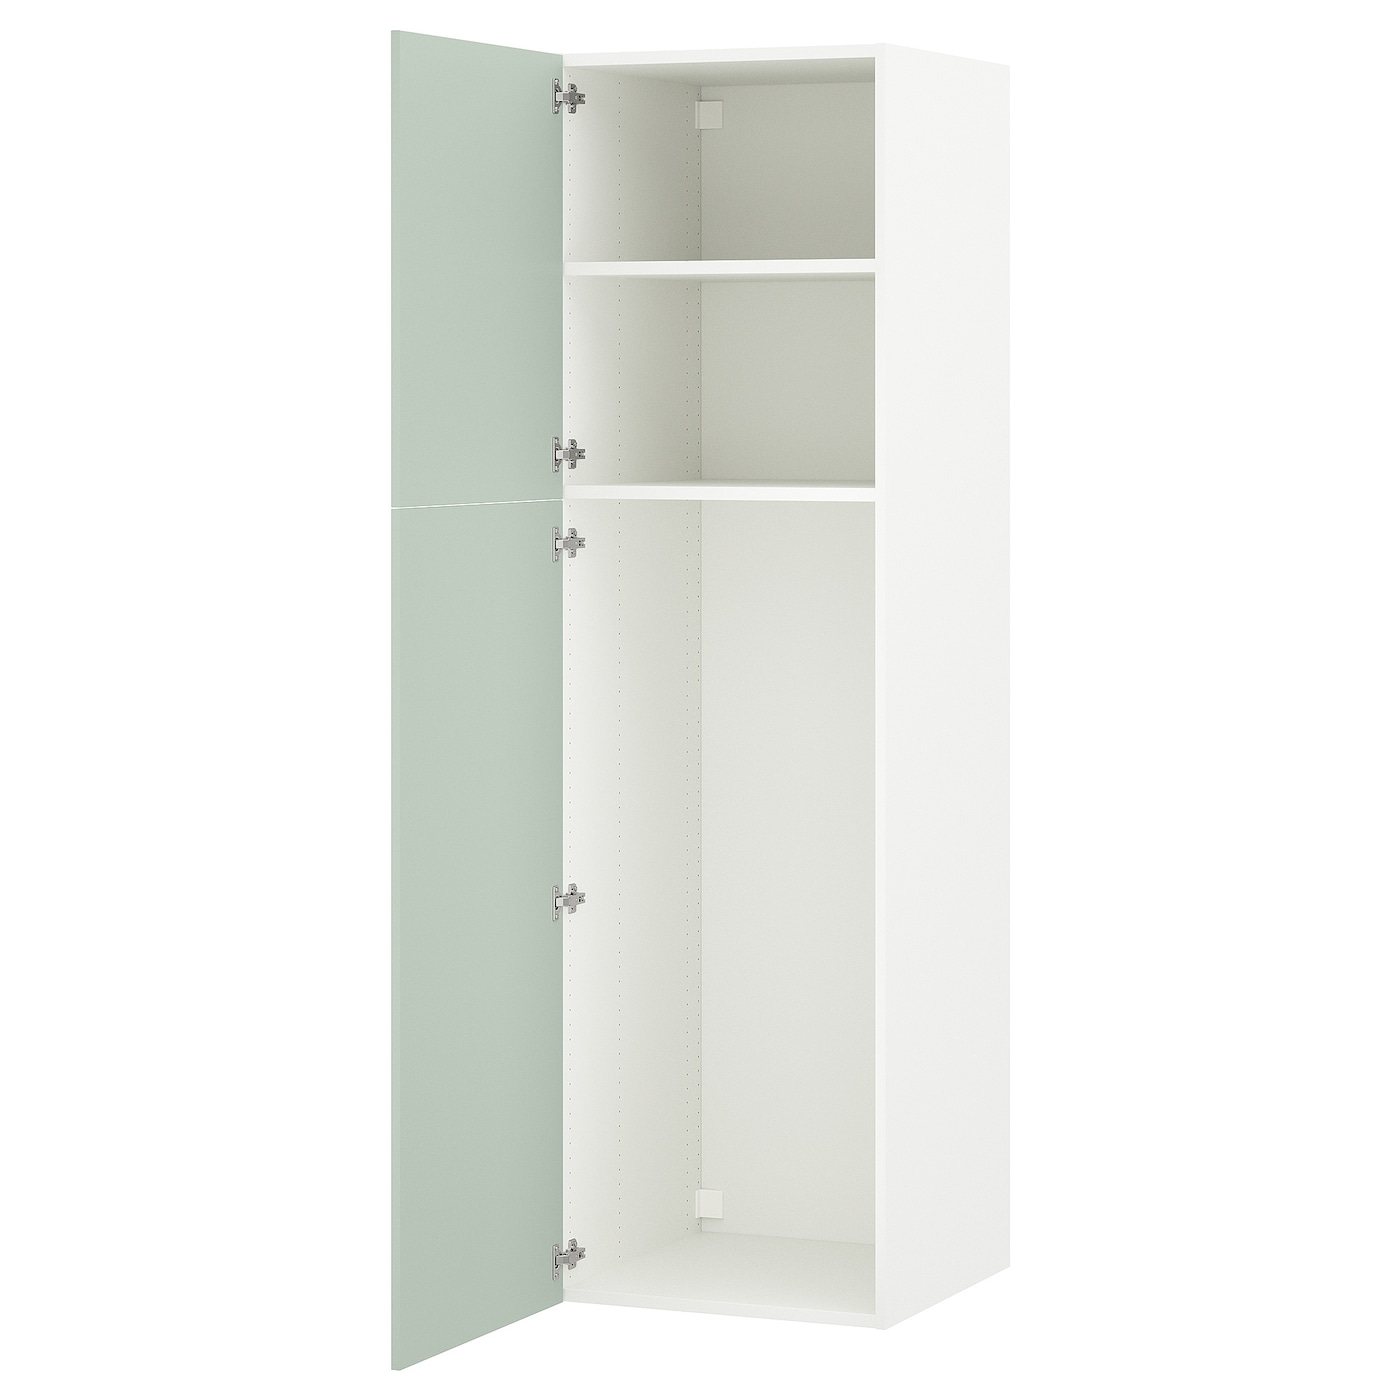 Высокий шкаф - IKEA ENHET/ЭНХЕТ ИКЕА, 210х62х60 см, белый/серо-голубой